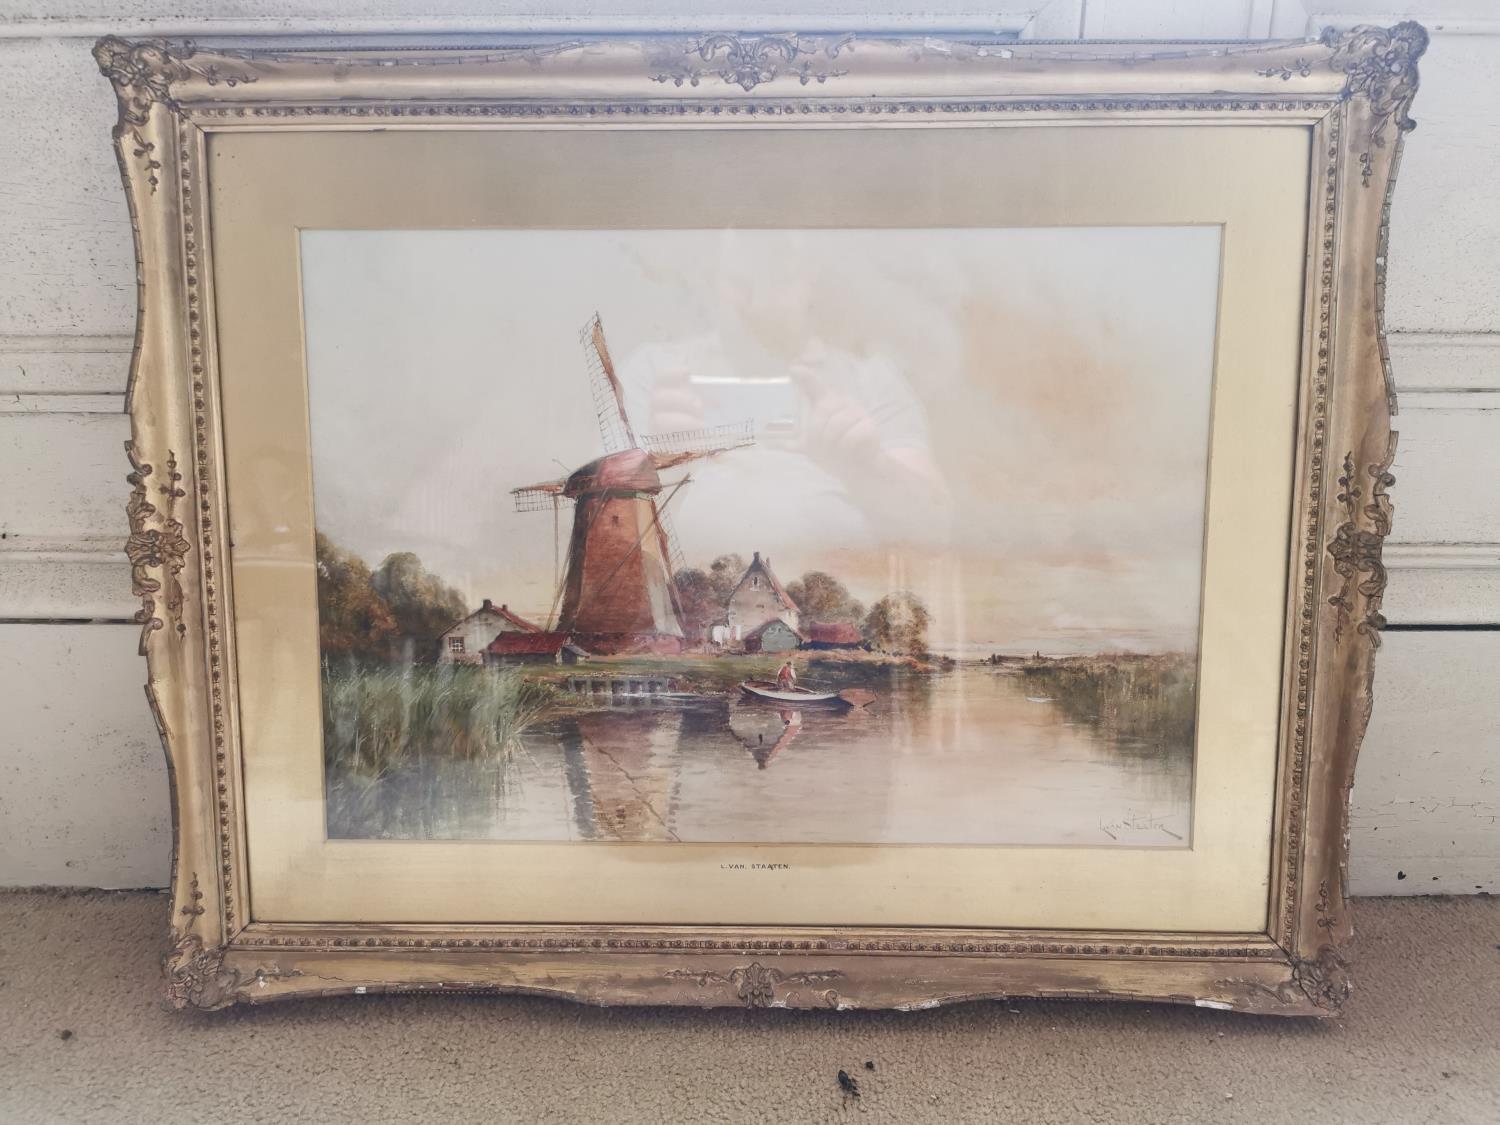 L. Van. Staaten 19th C. Dutch scene watercolour mounted in giltwood frame {62 cm H x 80 cm W}.